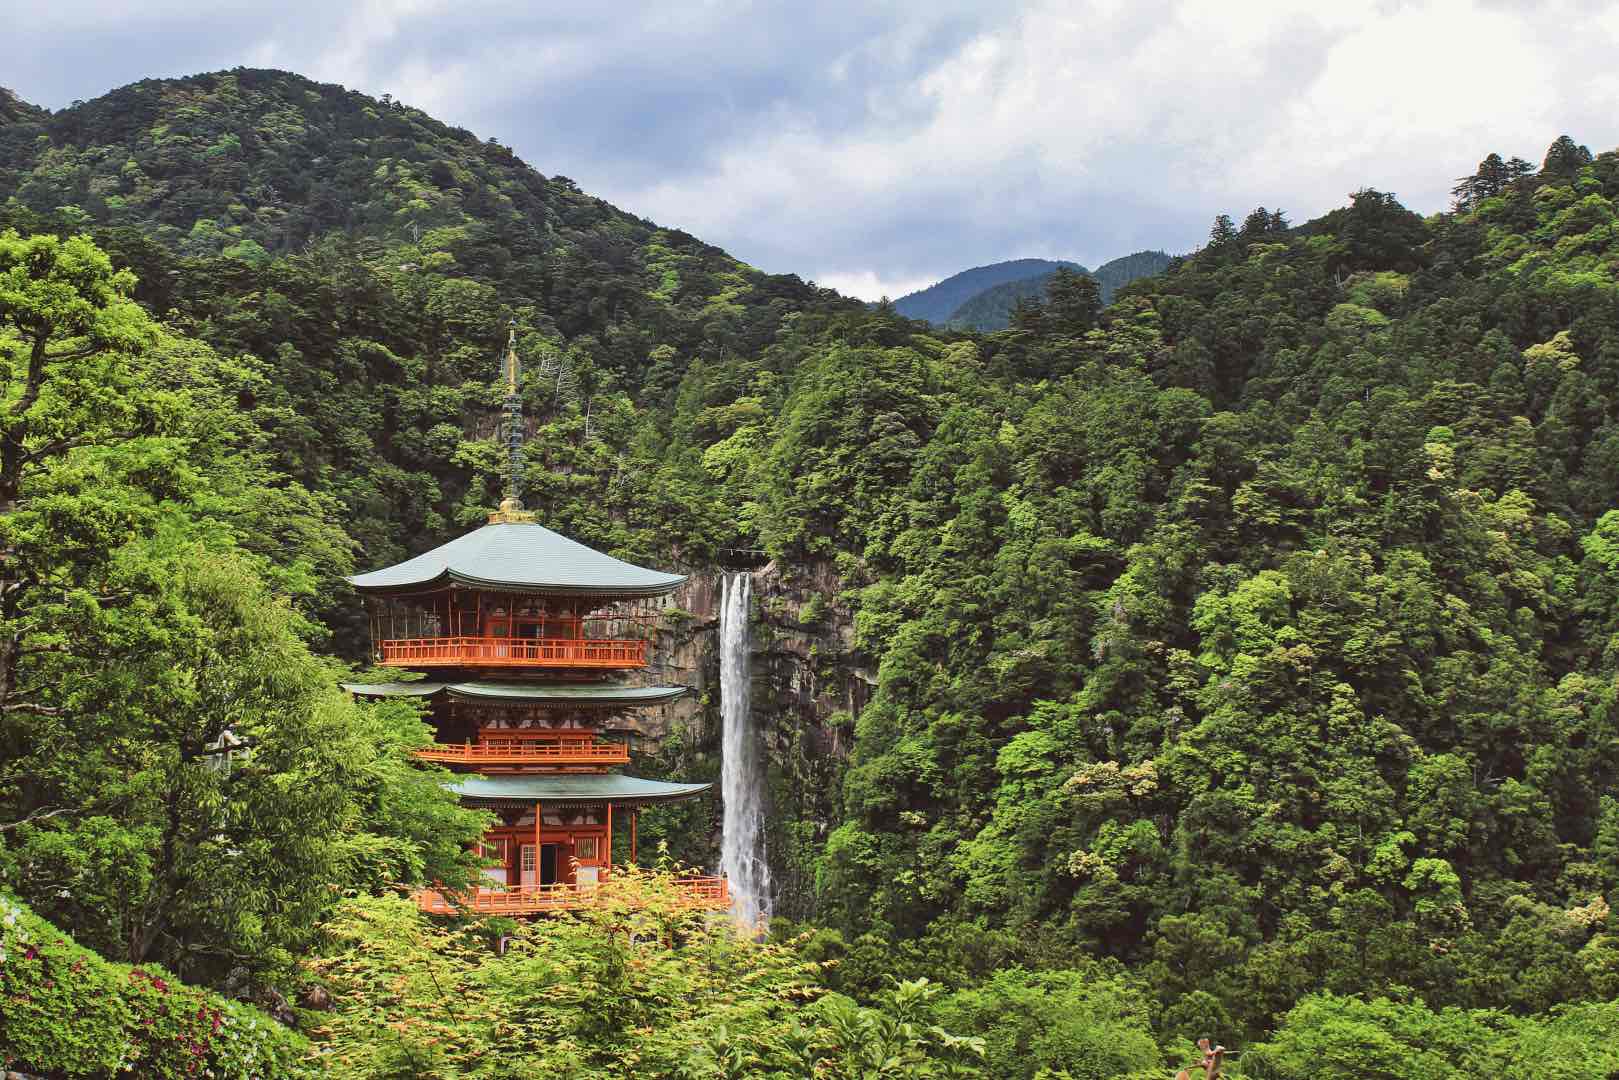 Rewarding view of Nachi-san after trekking the Kumano Kodo in Wakayama, Japan.